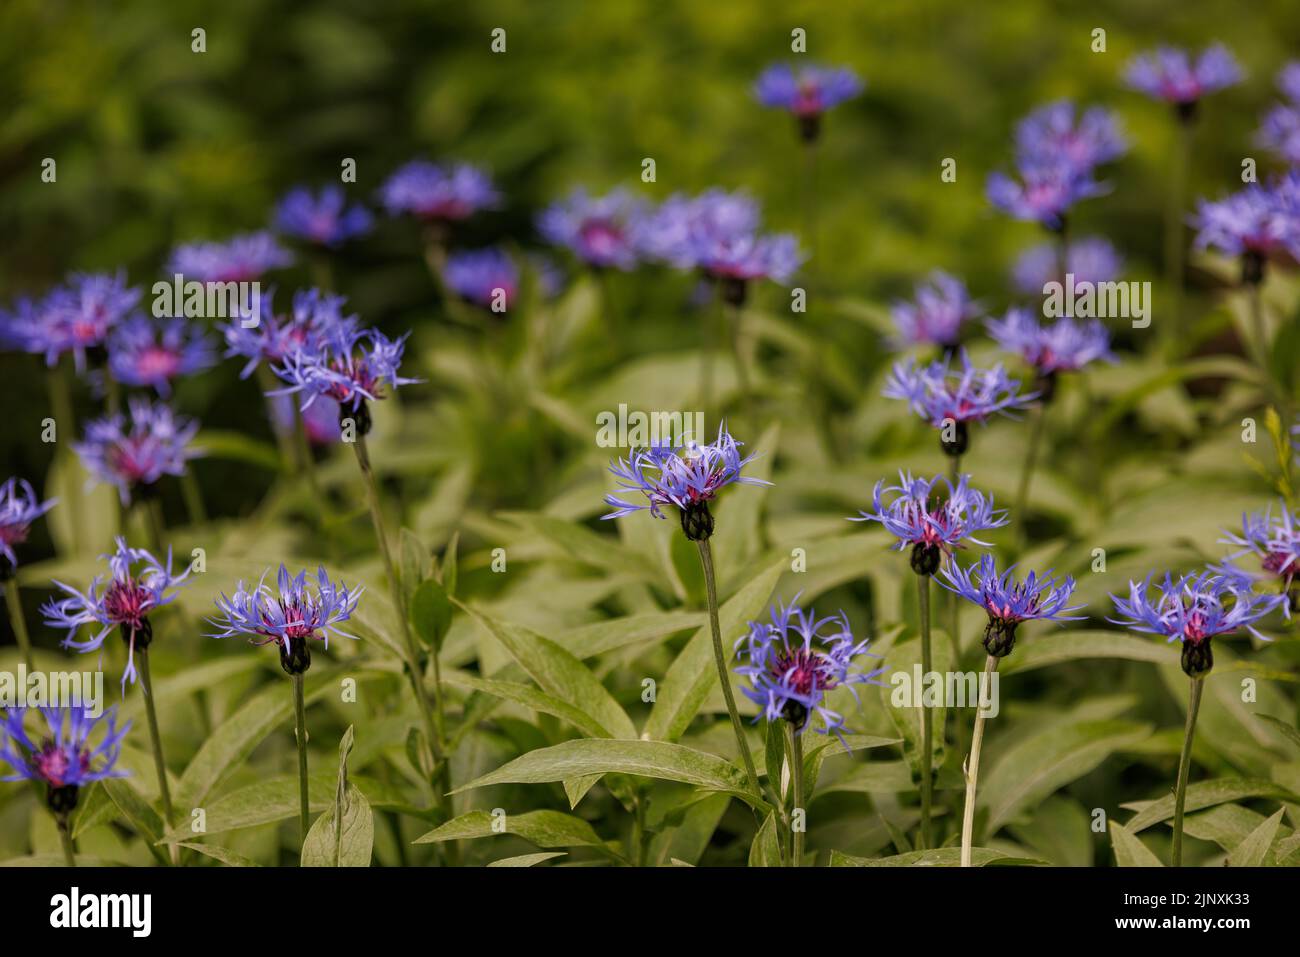 many squarrose knapweed, Centaurea (cyanus) triumfettii - blue flowers from Asteraceae family Stock Photo